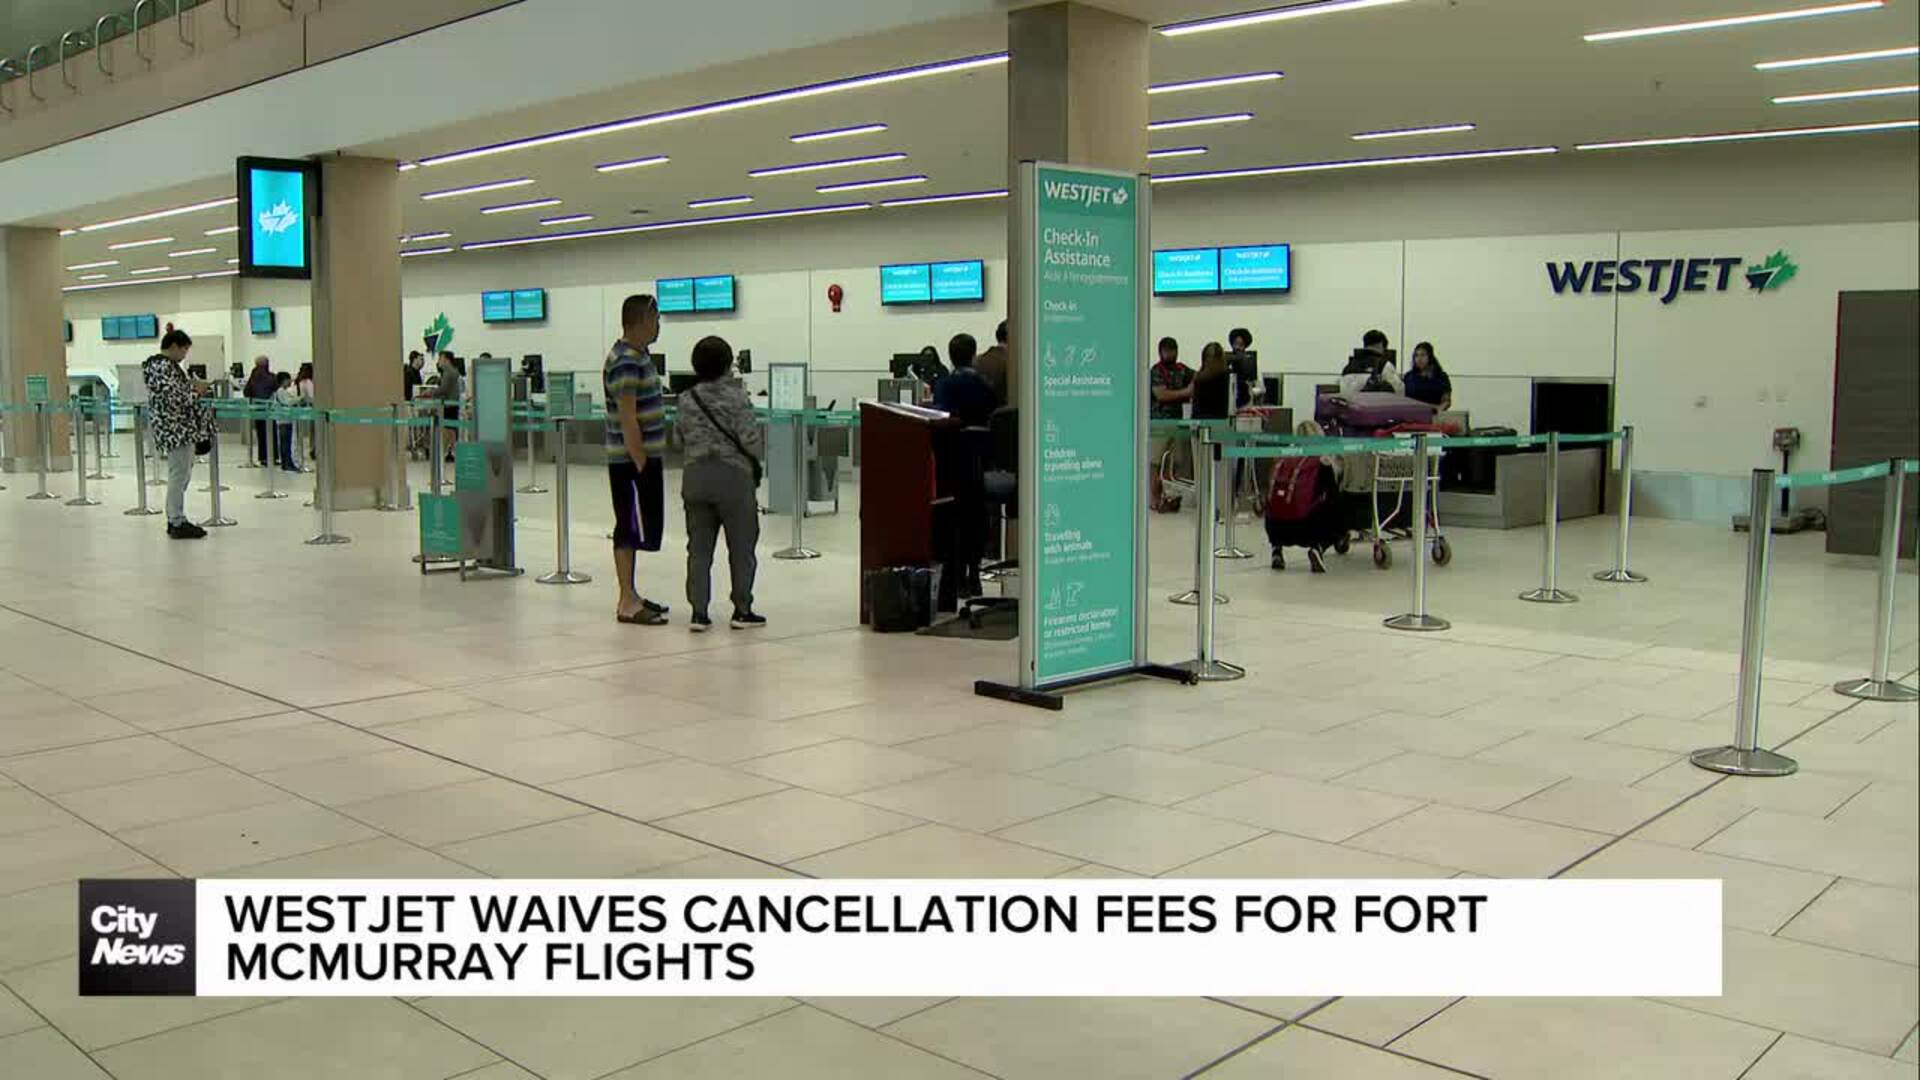 WestJet waives cancellation fees for Fort McMurray flights